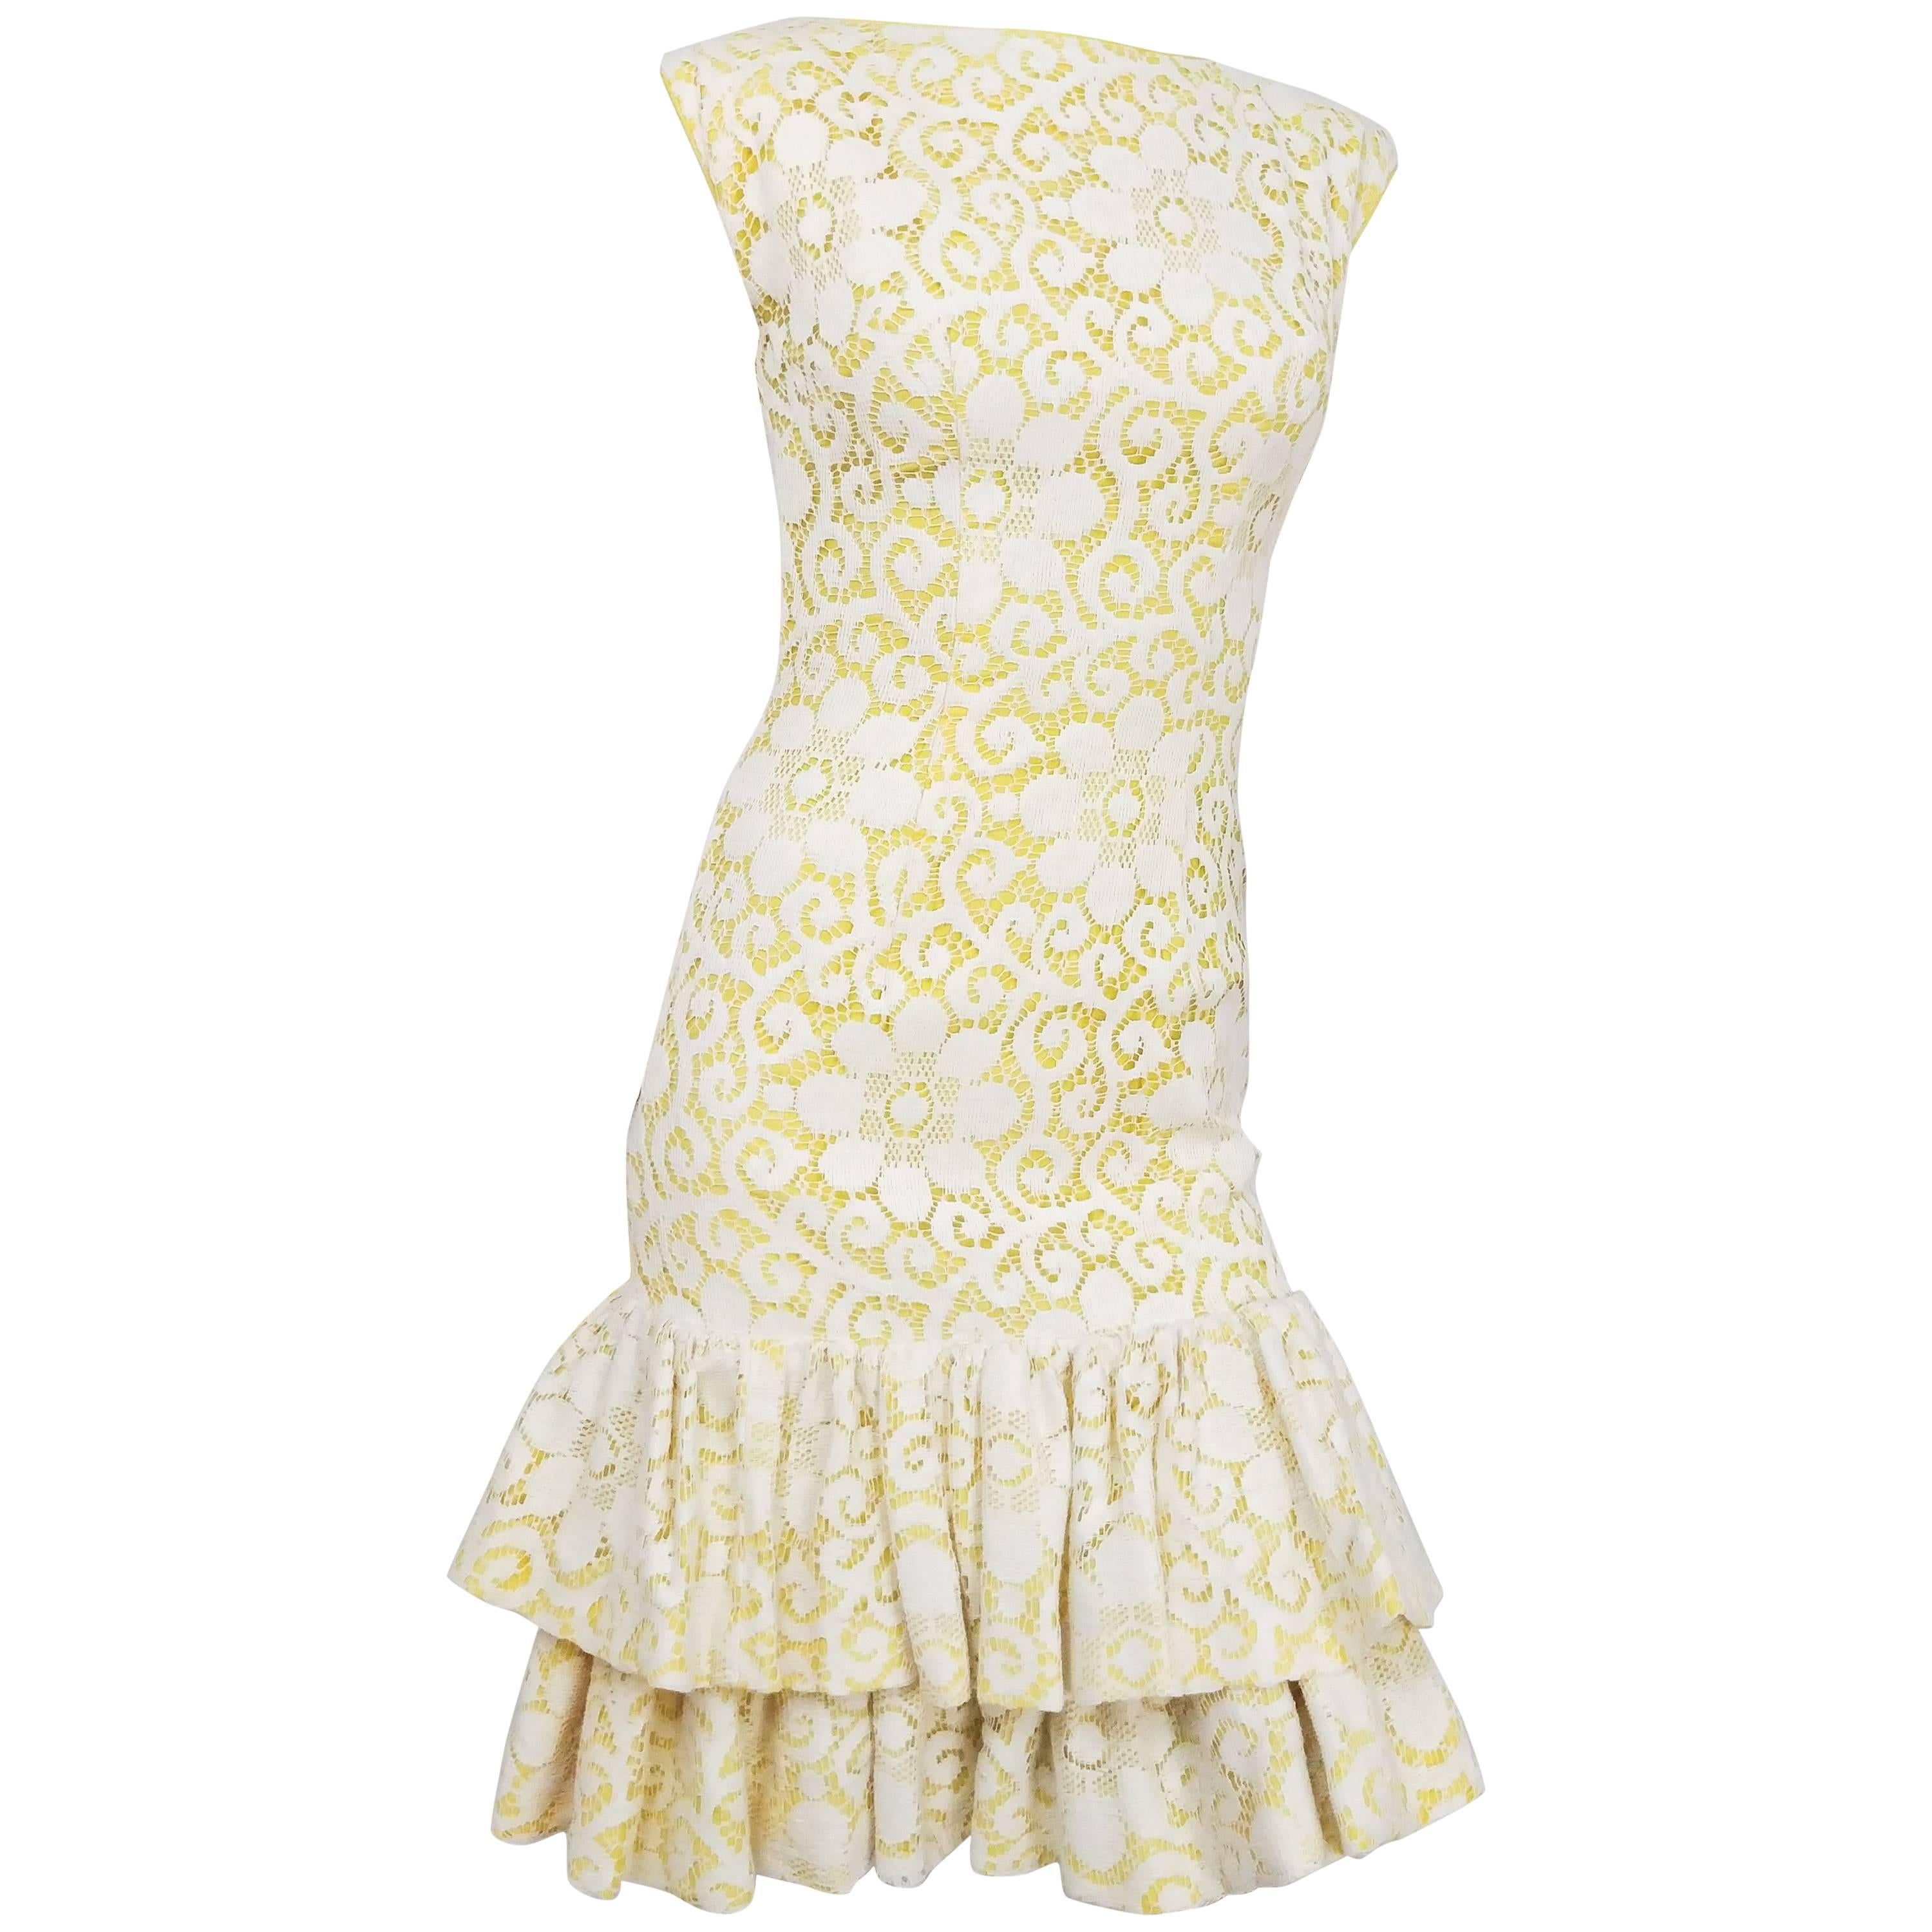 Lilli Diamond Yellow Drop-waist Ruffle Cocktail Dress with Lace Overlay, 1960s 